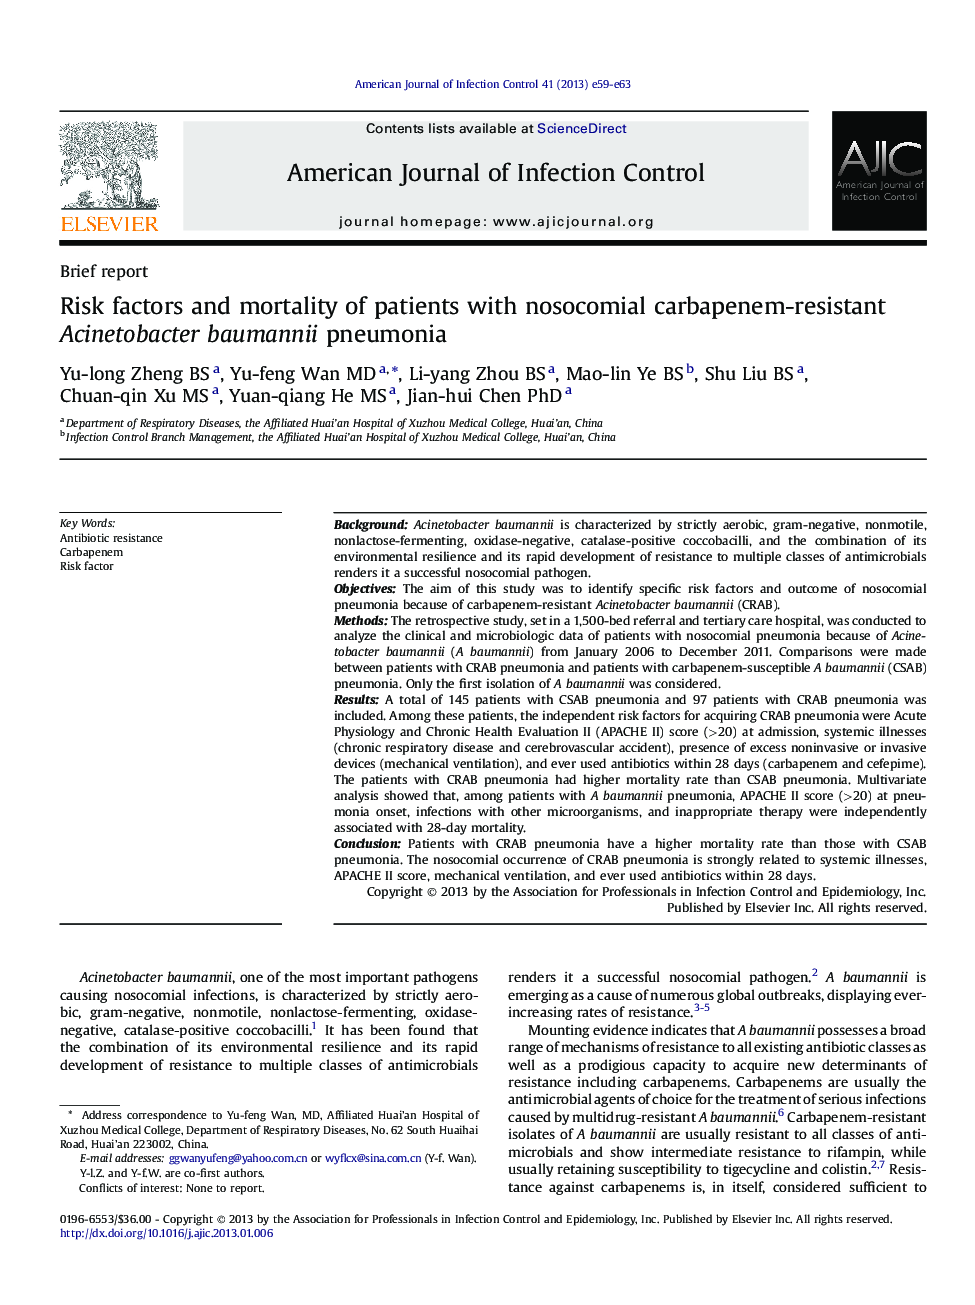 Risk factors and mortality of patients with nosocomial carbapenem-resistant Acinetobacter baumannii pneumonia 